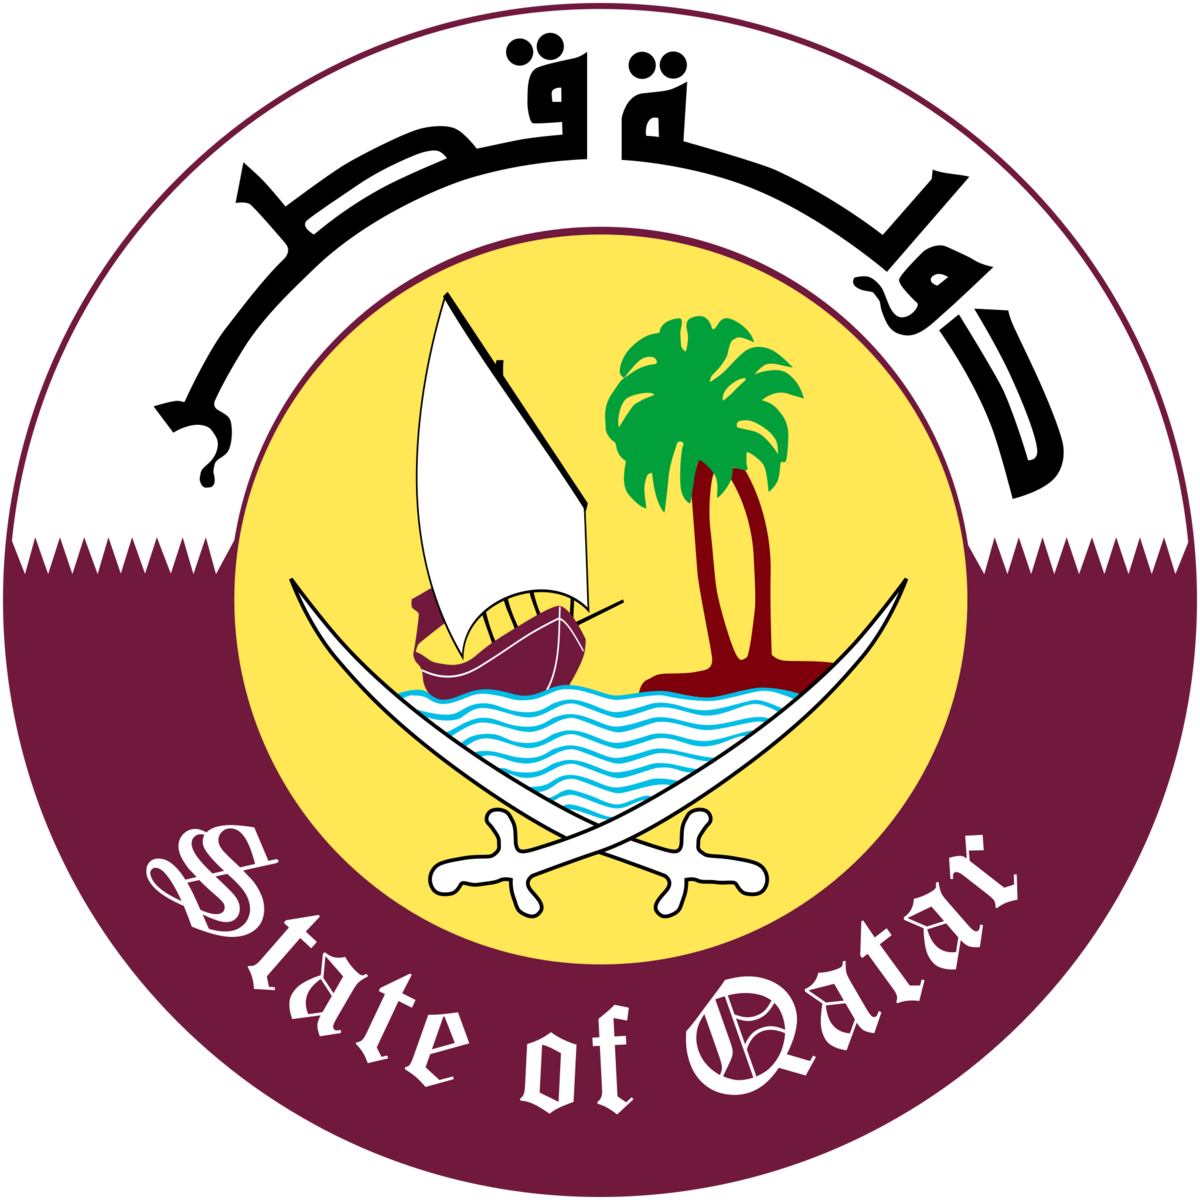 Qatars statsemblem fra 1978 til 2007